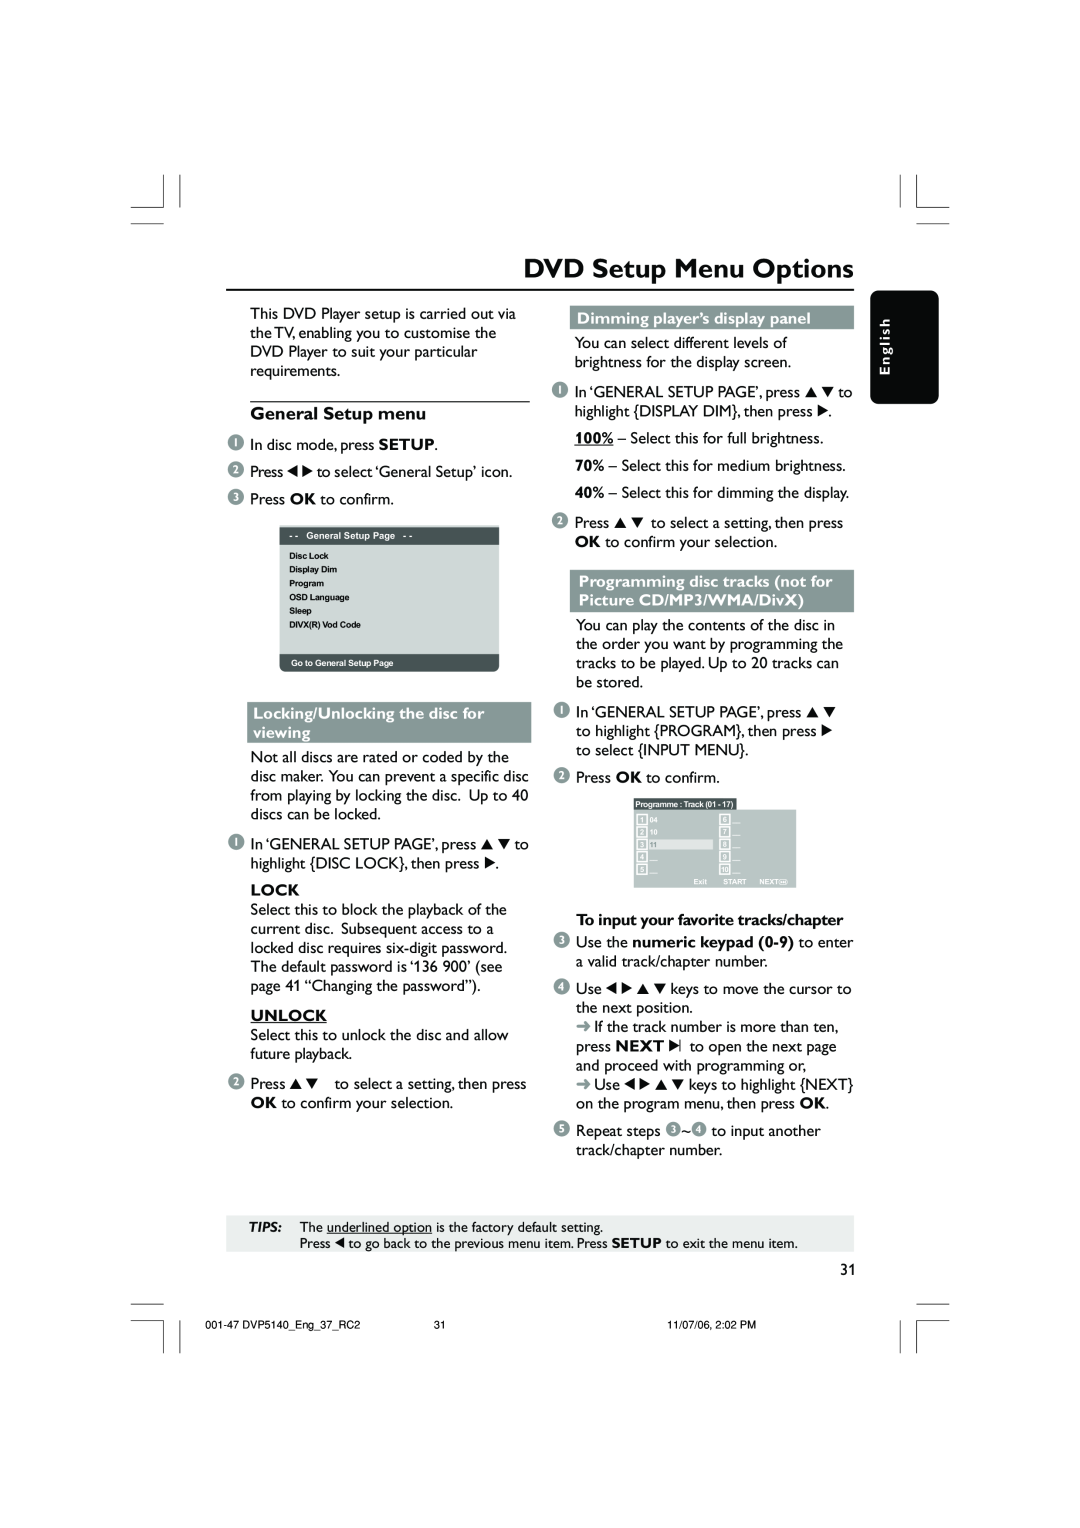 Philips DVP5140 user manual DVD Setup Menu Options, General Setup menu, Locking/Unlocking the disc for viewing 